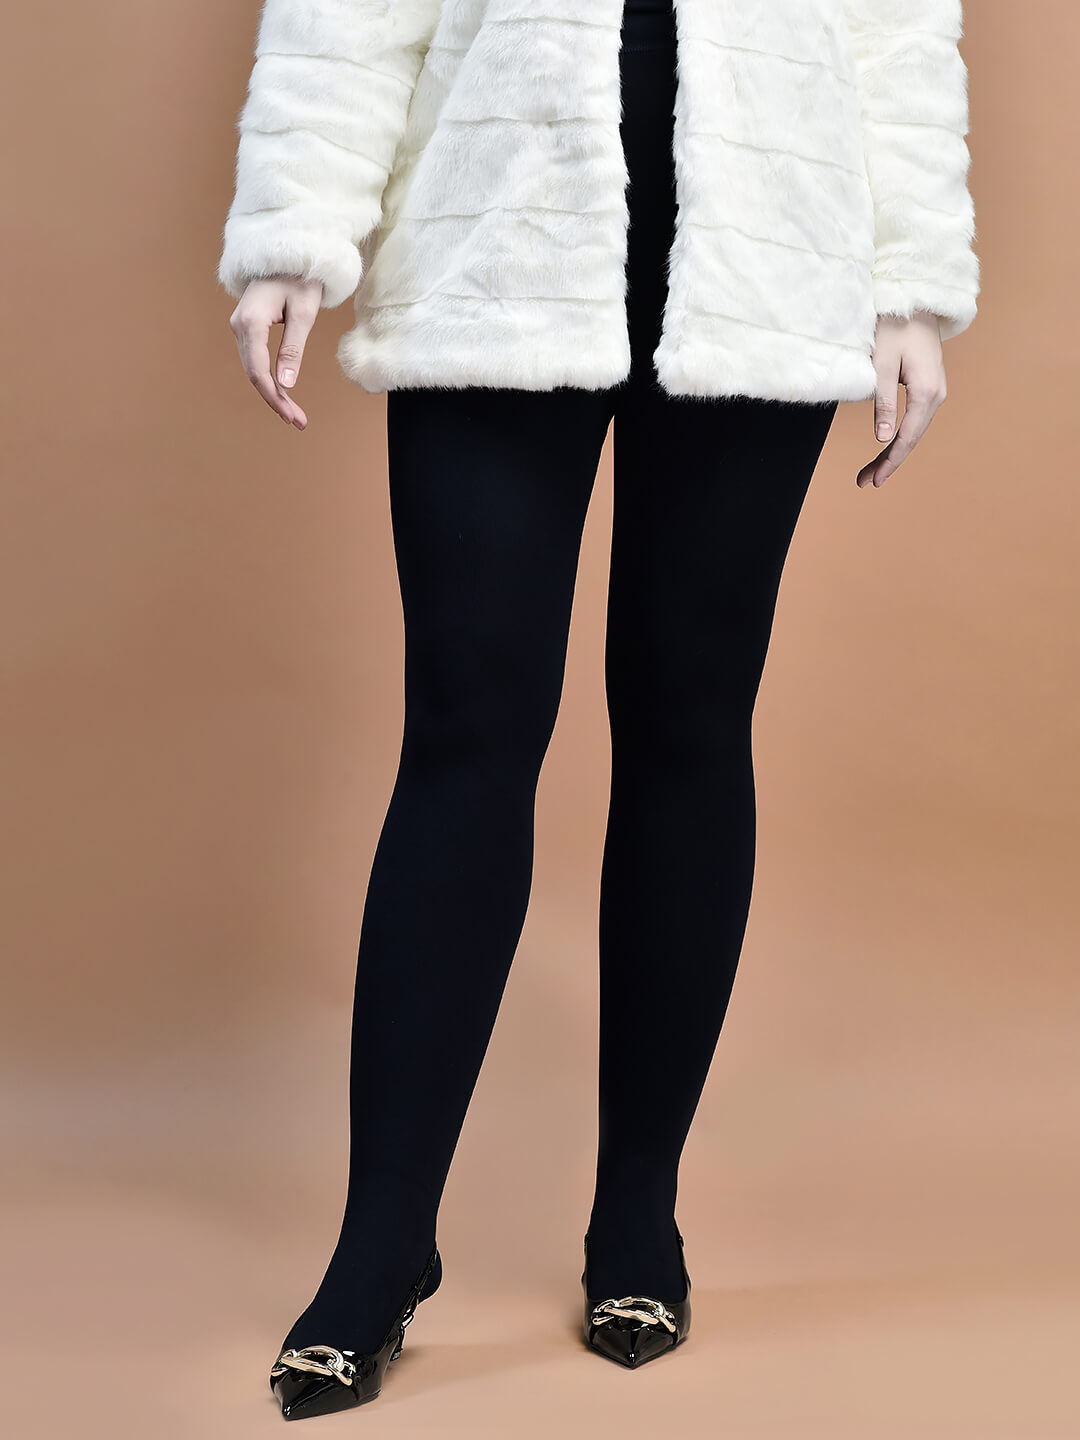 Visland Women Pantyhose Tights, Thickened Warm Fleece Lined Leggings for  Autumn Winter (50g/150g) - Walmart.com